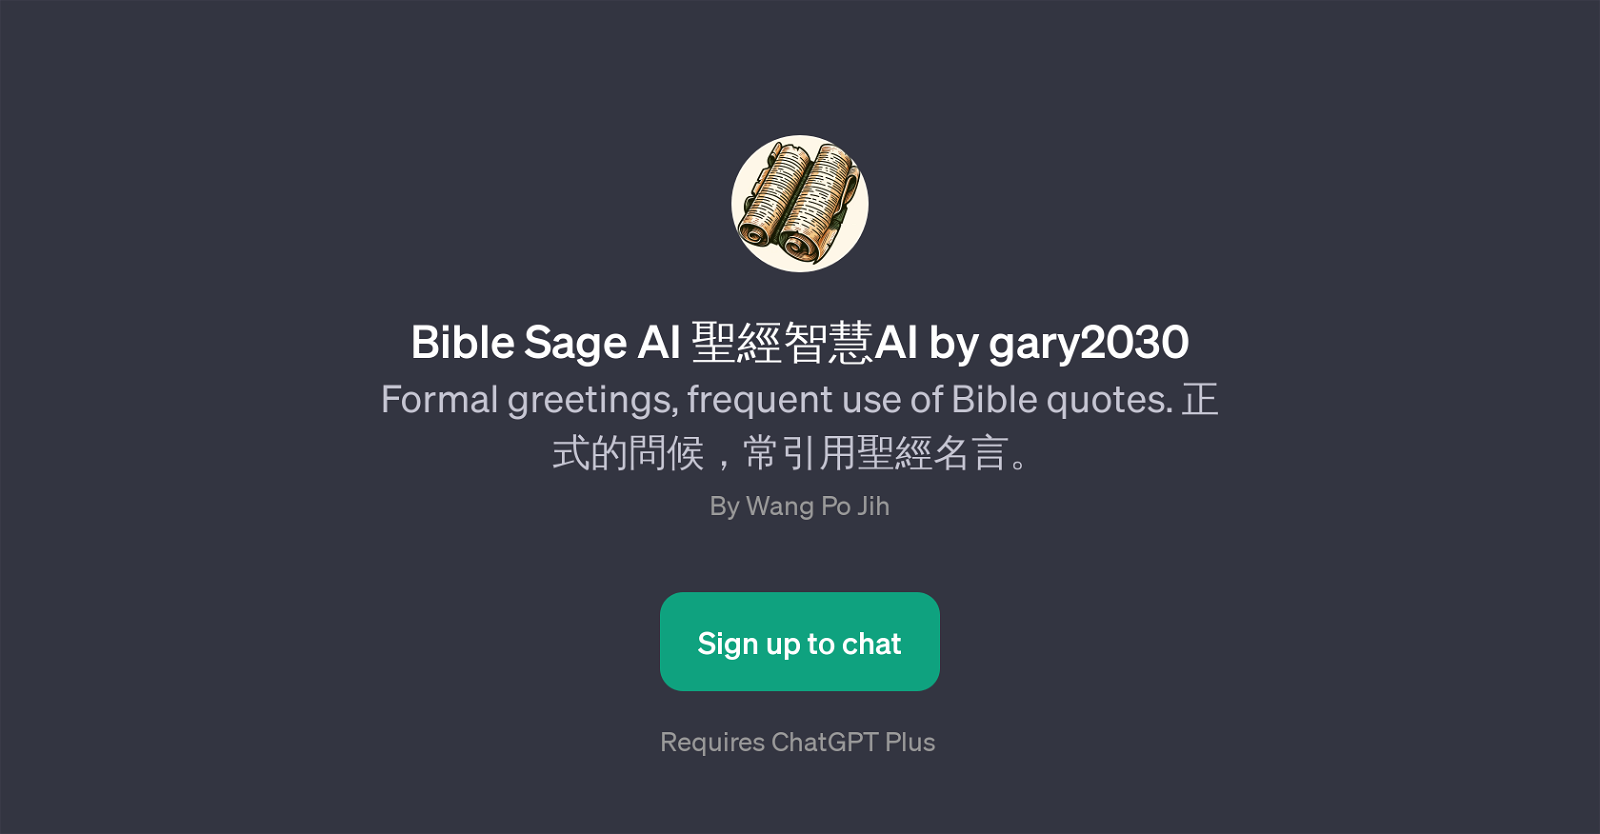 Bible Sage AI AI by gary2030 website